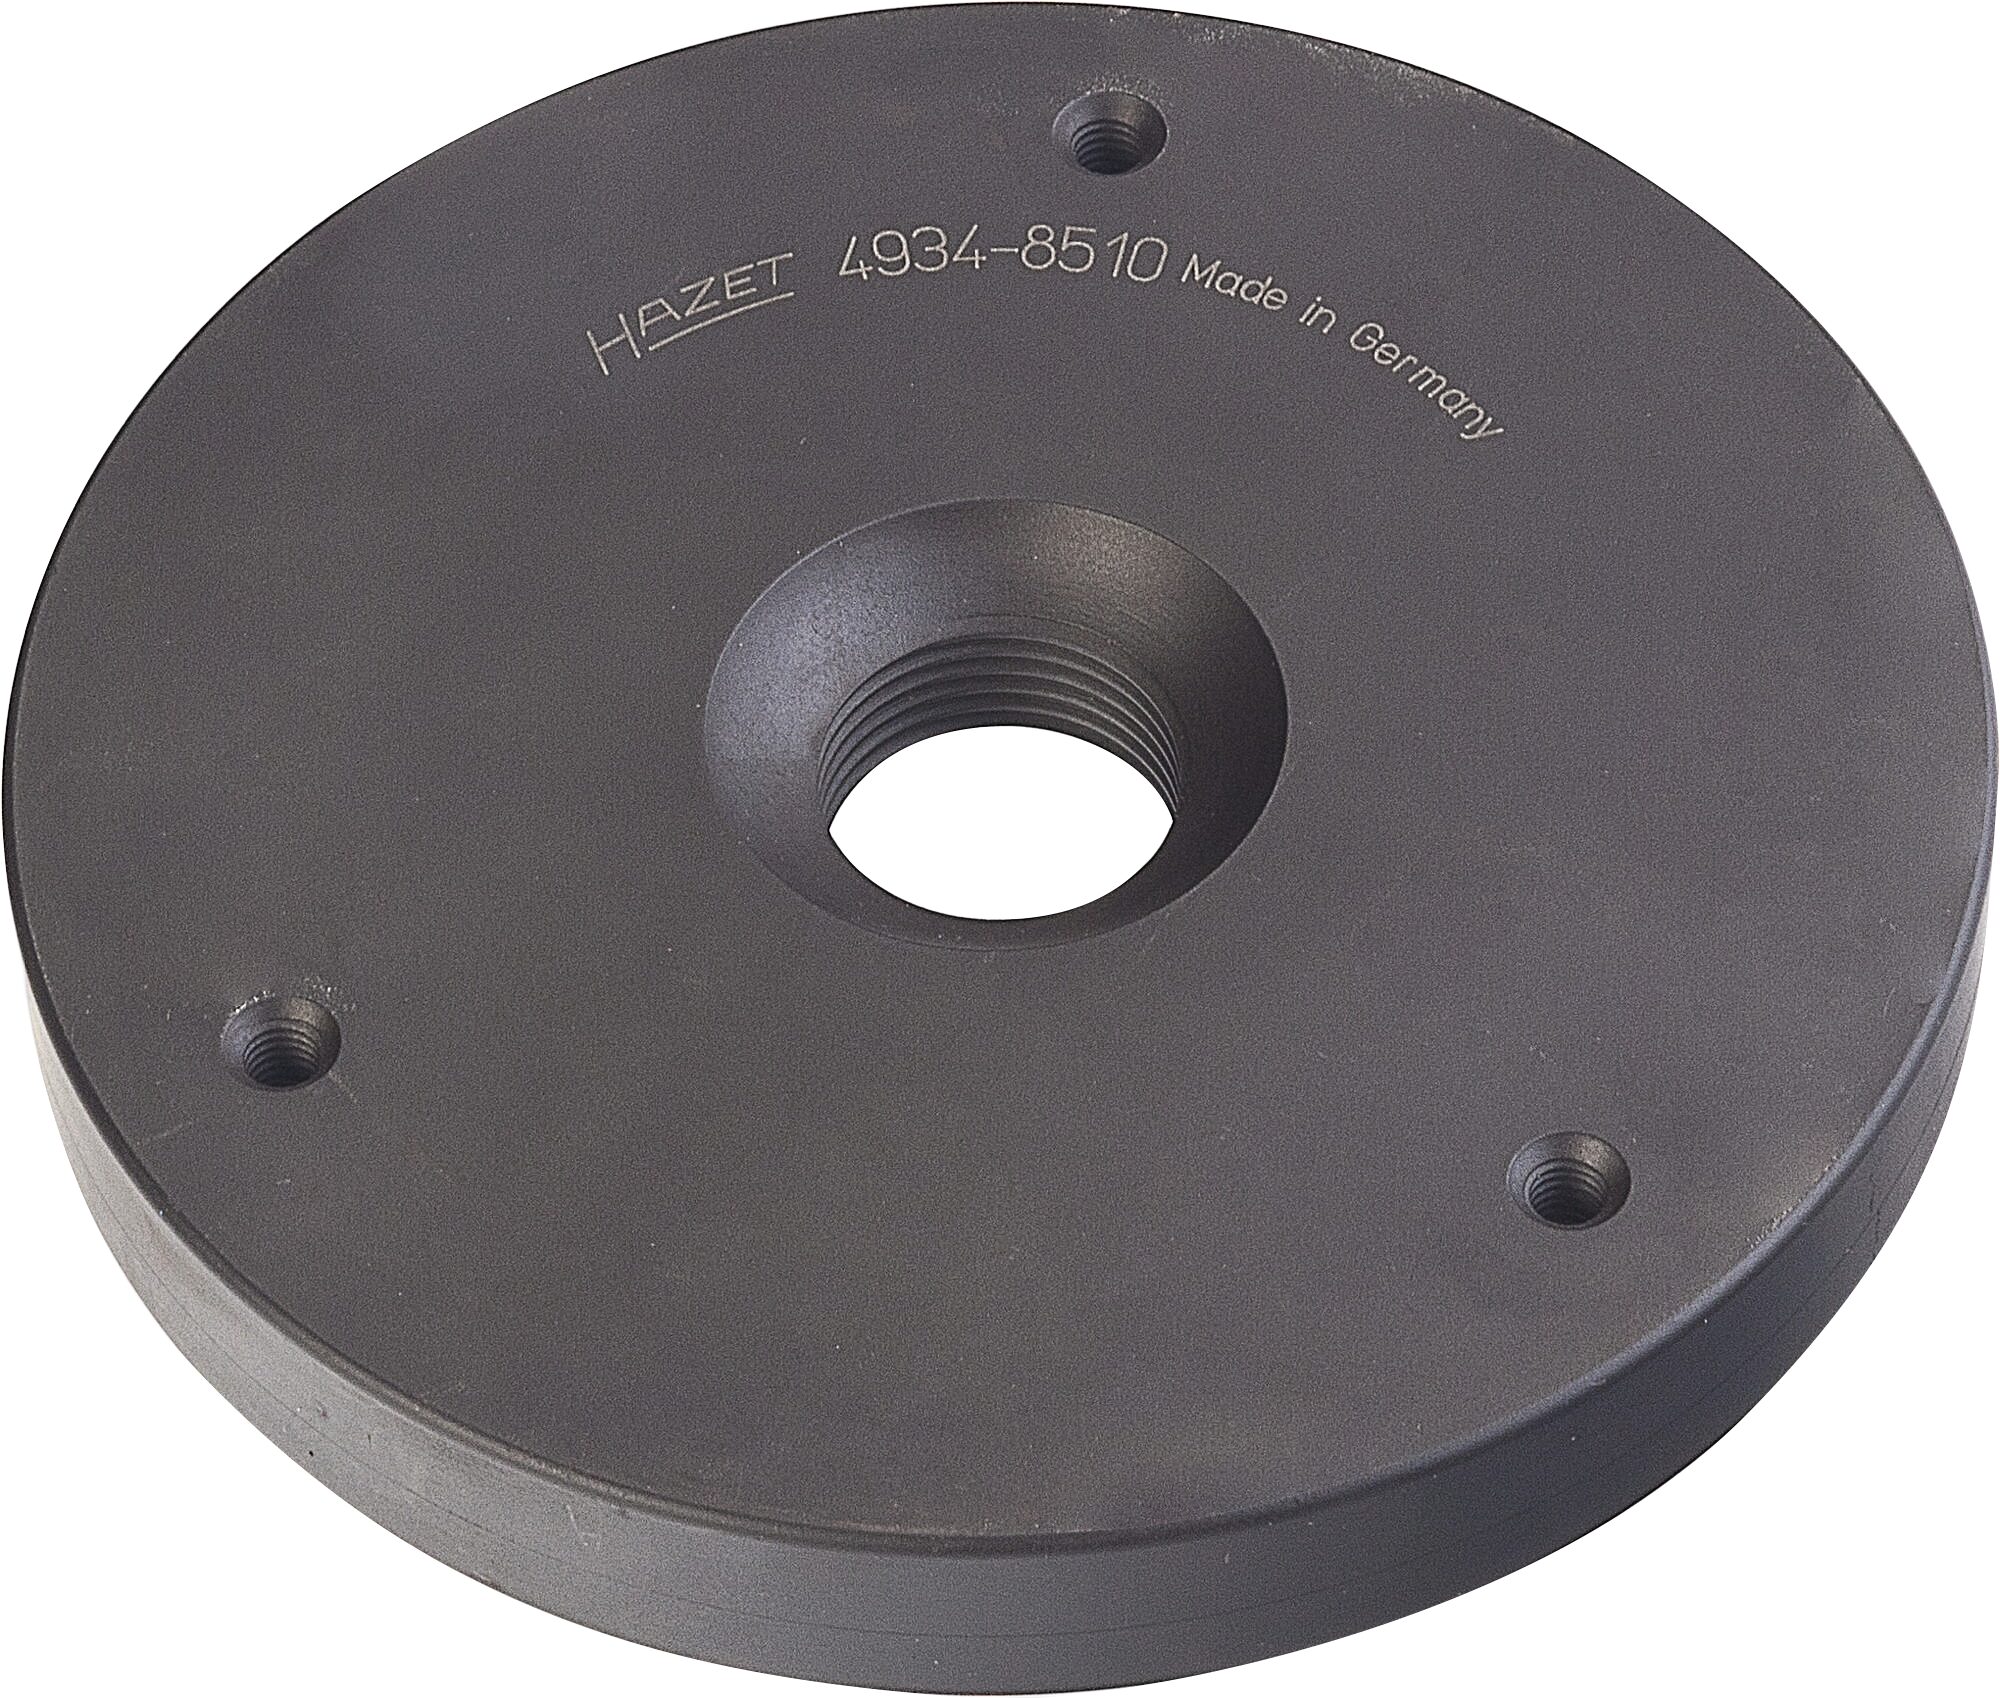 HAZET Druckplatte 4934-8510 · 137 mm